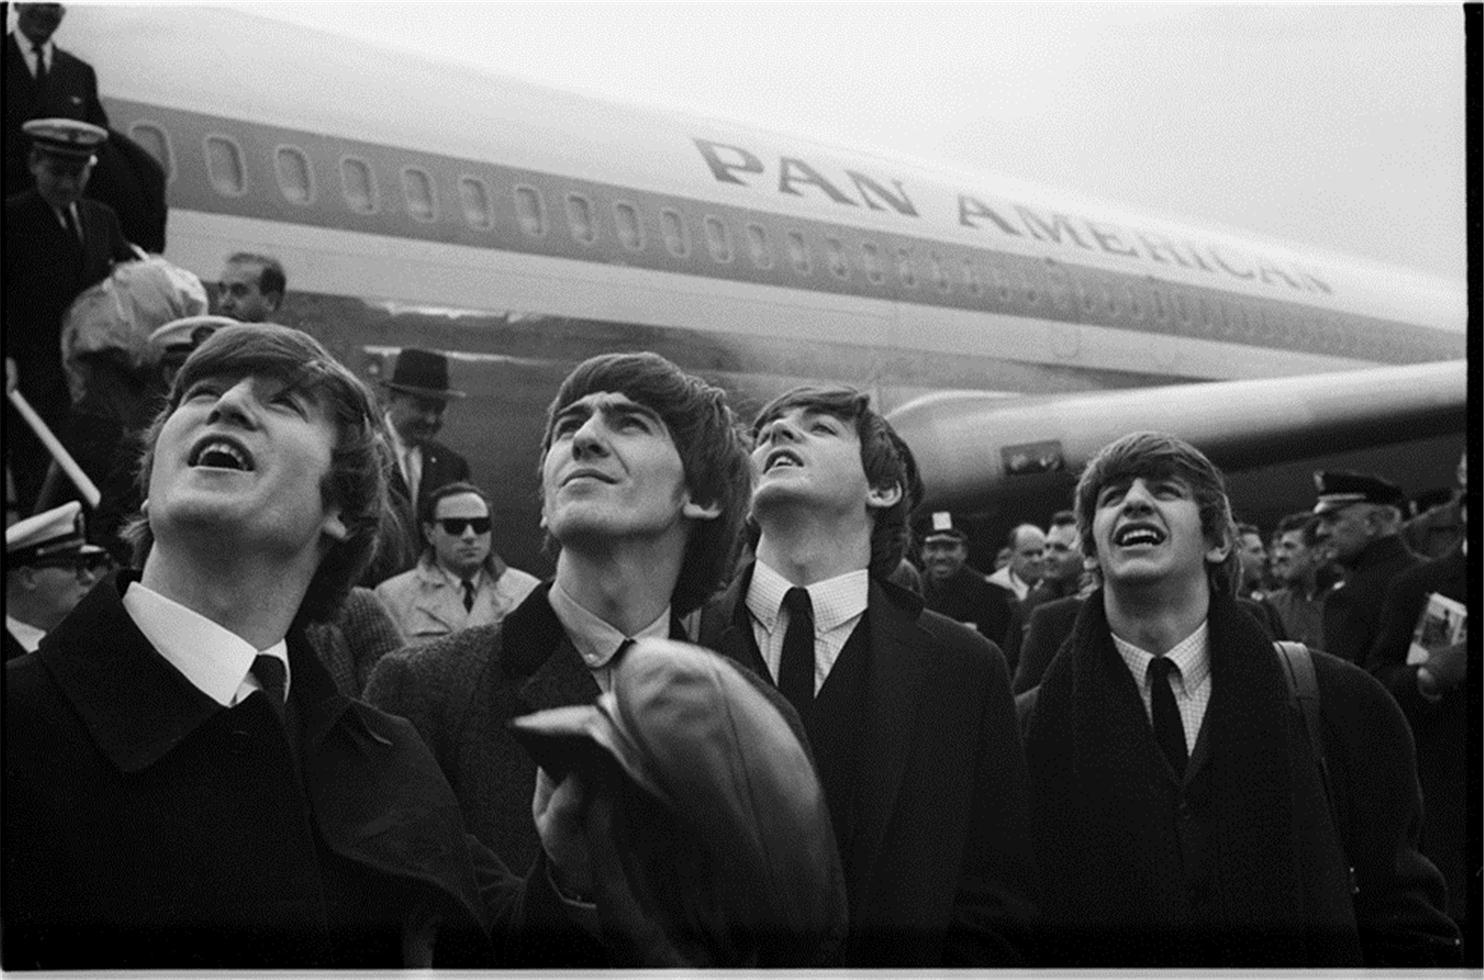 Ken Regan Portrait Photograph - The Beatles, NYC, 1964